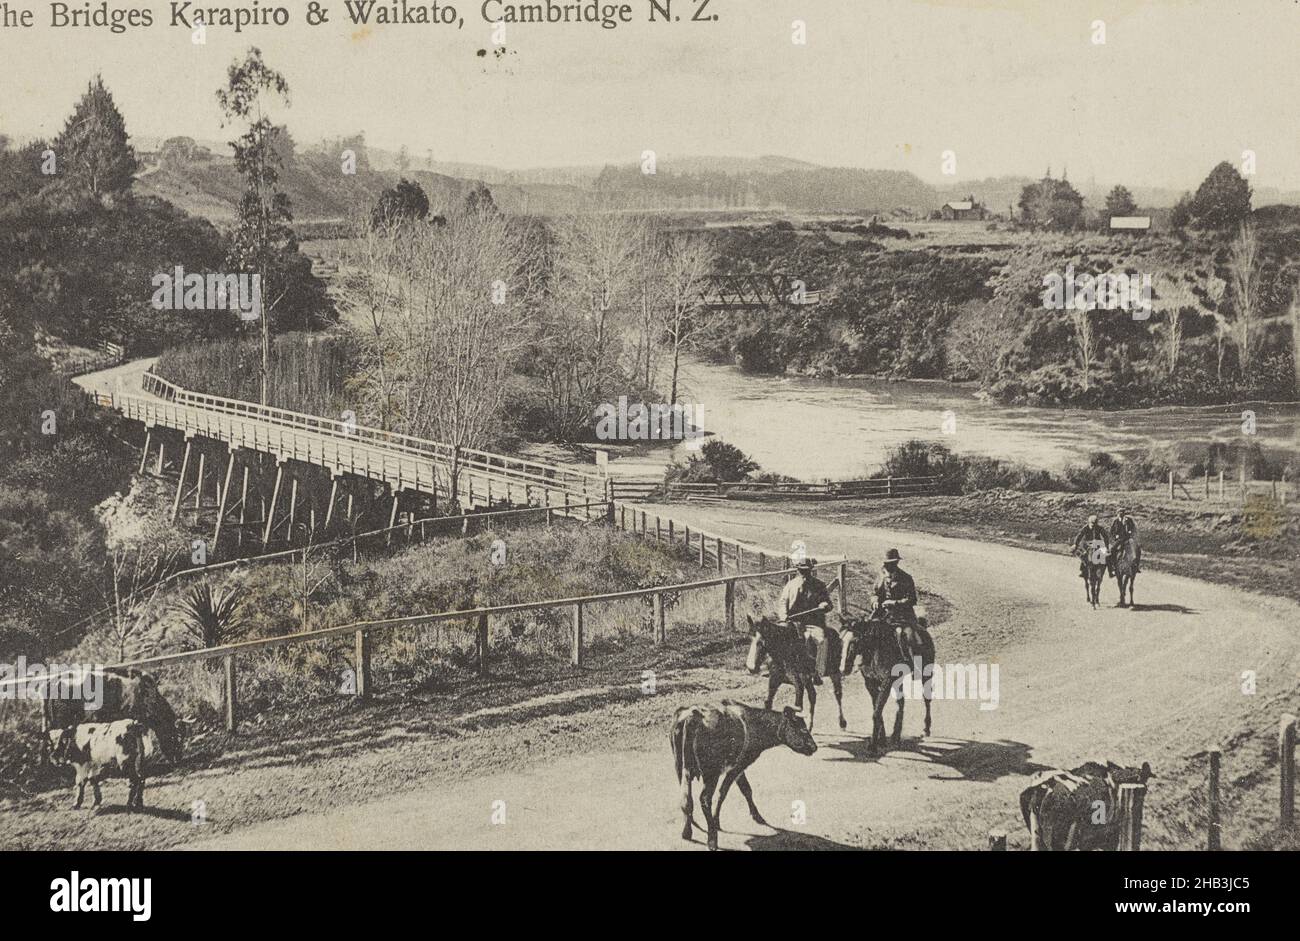 The Bridges Karapiro and Waikato, Cambridge, New Zealand, Muir & Moodie studio, 1904-1915, Cambridge Stock Photo